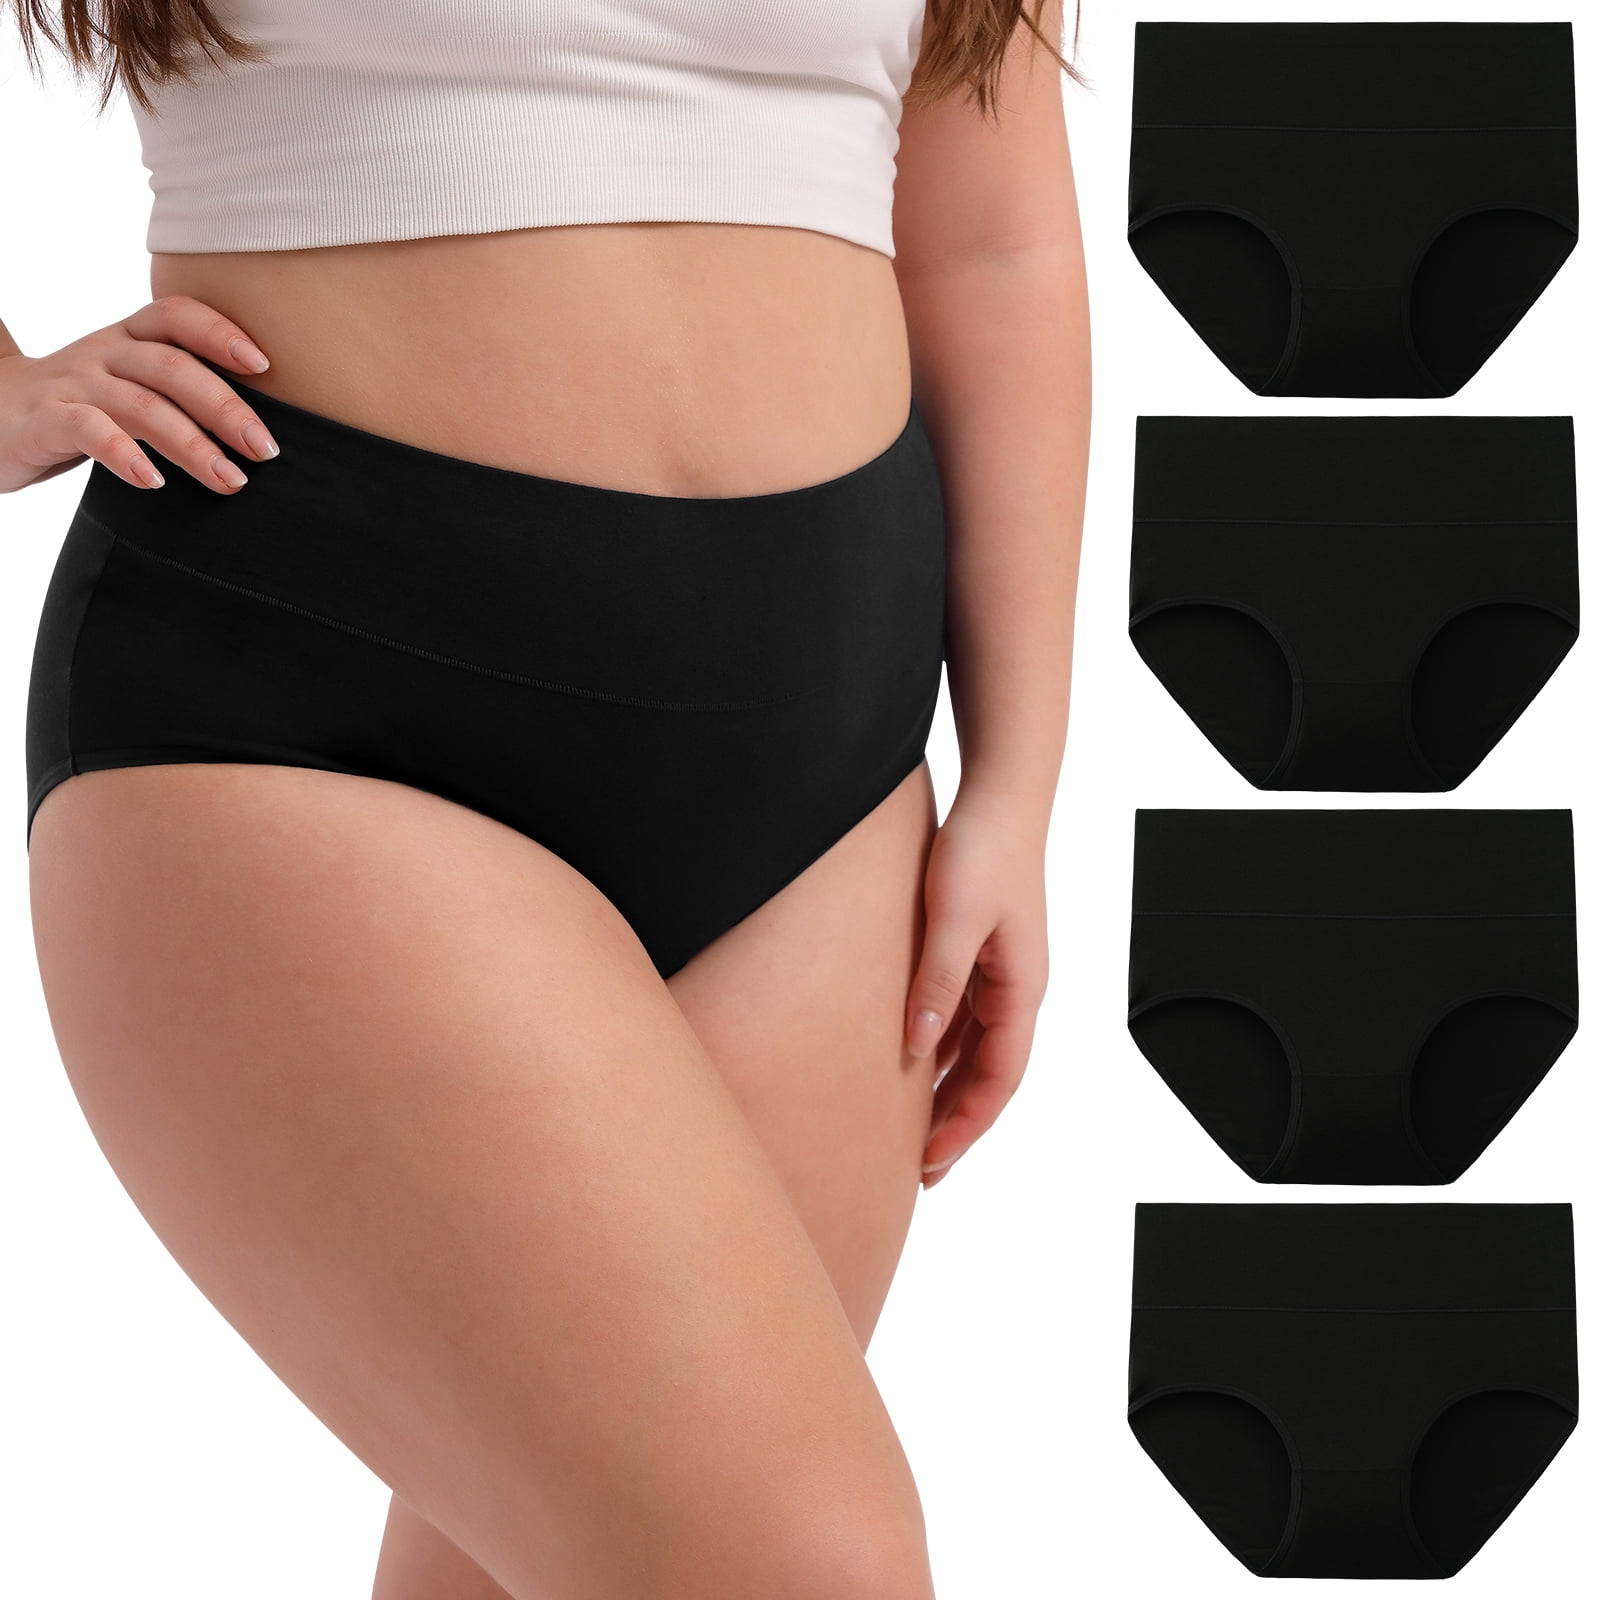 Cotton High Waist Abdominal Slimming Hygroscopic Underwear, Rose Jacquard  Ladies Panty Stretch Breathable Briefs (Black,2XL)